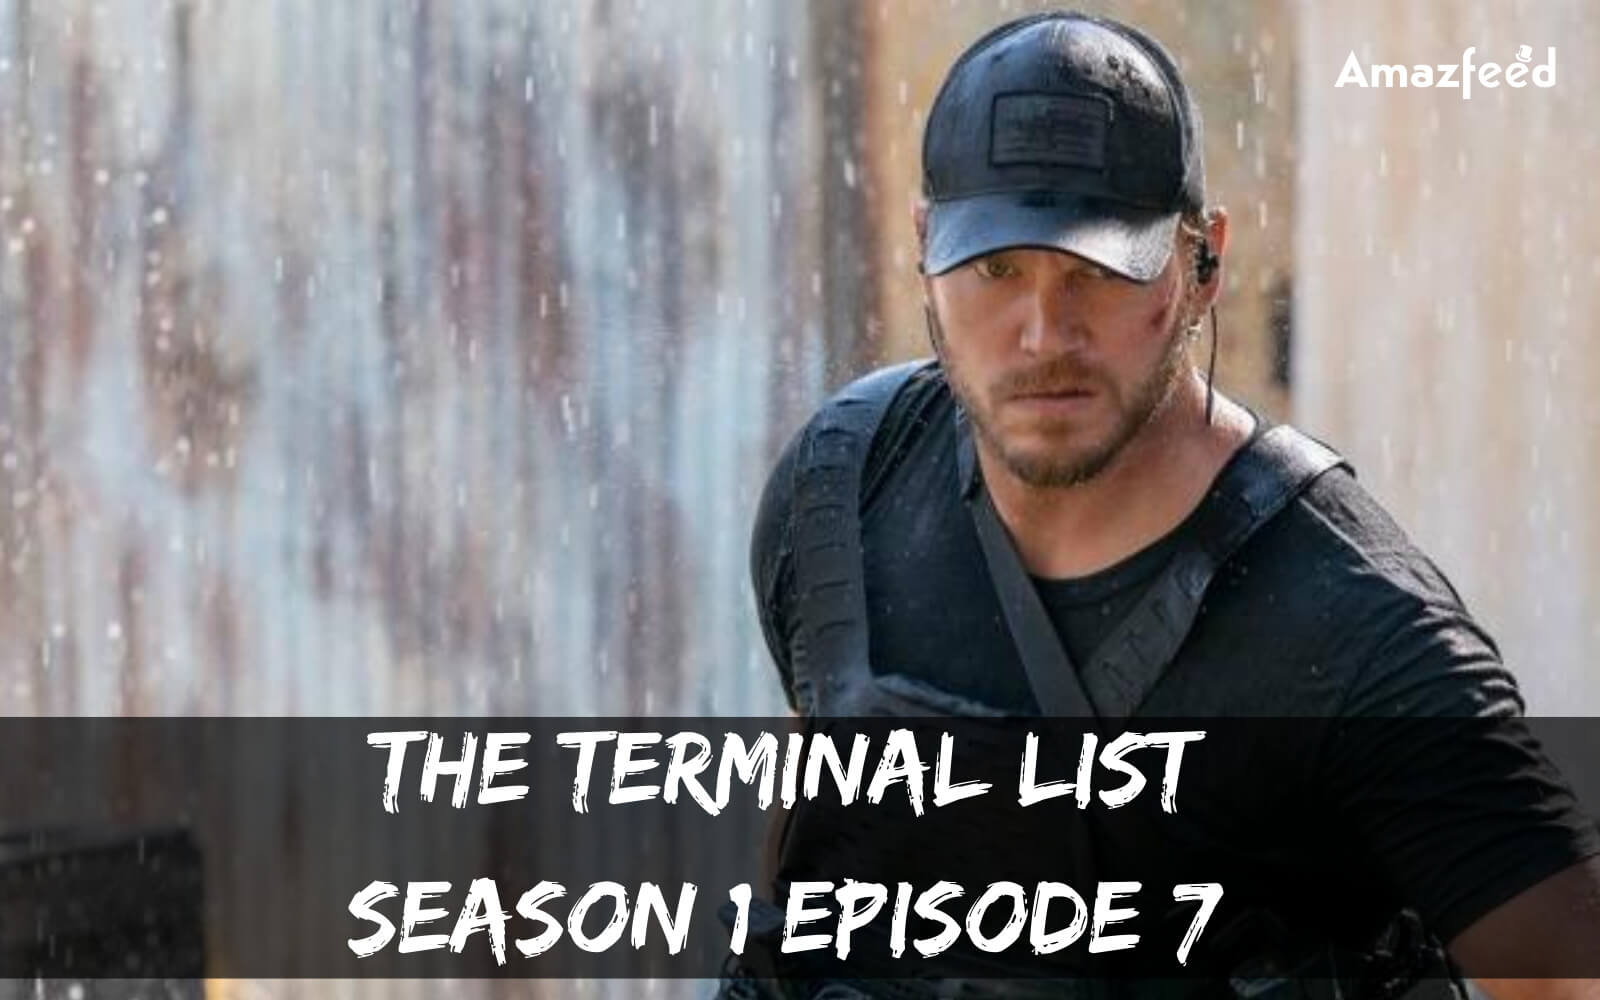 The Terminal List season 1 episode 7 release date